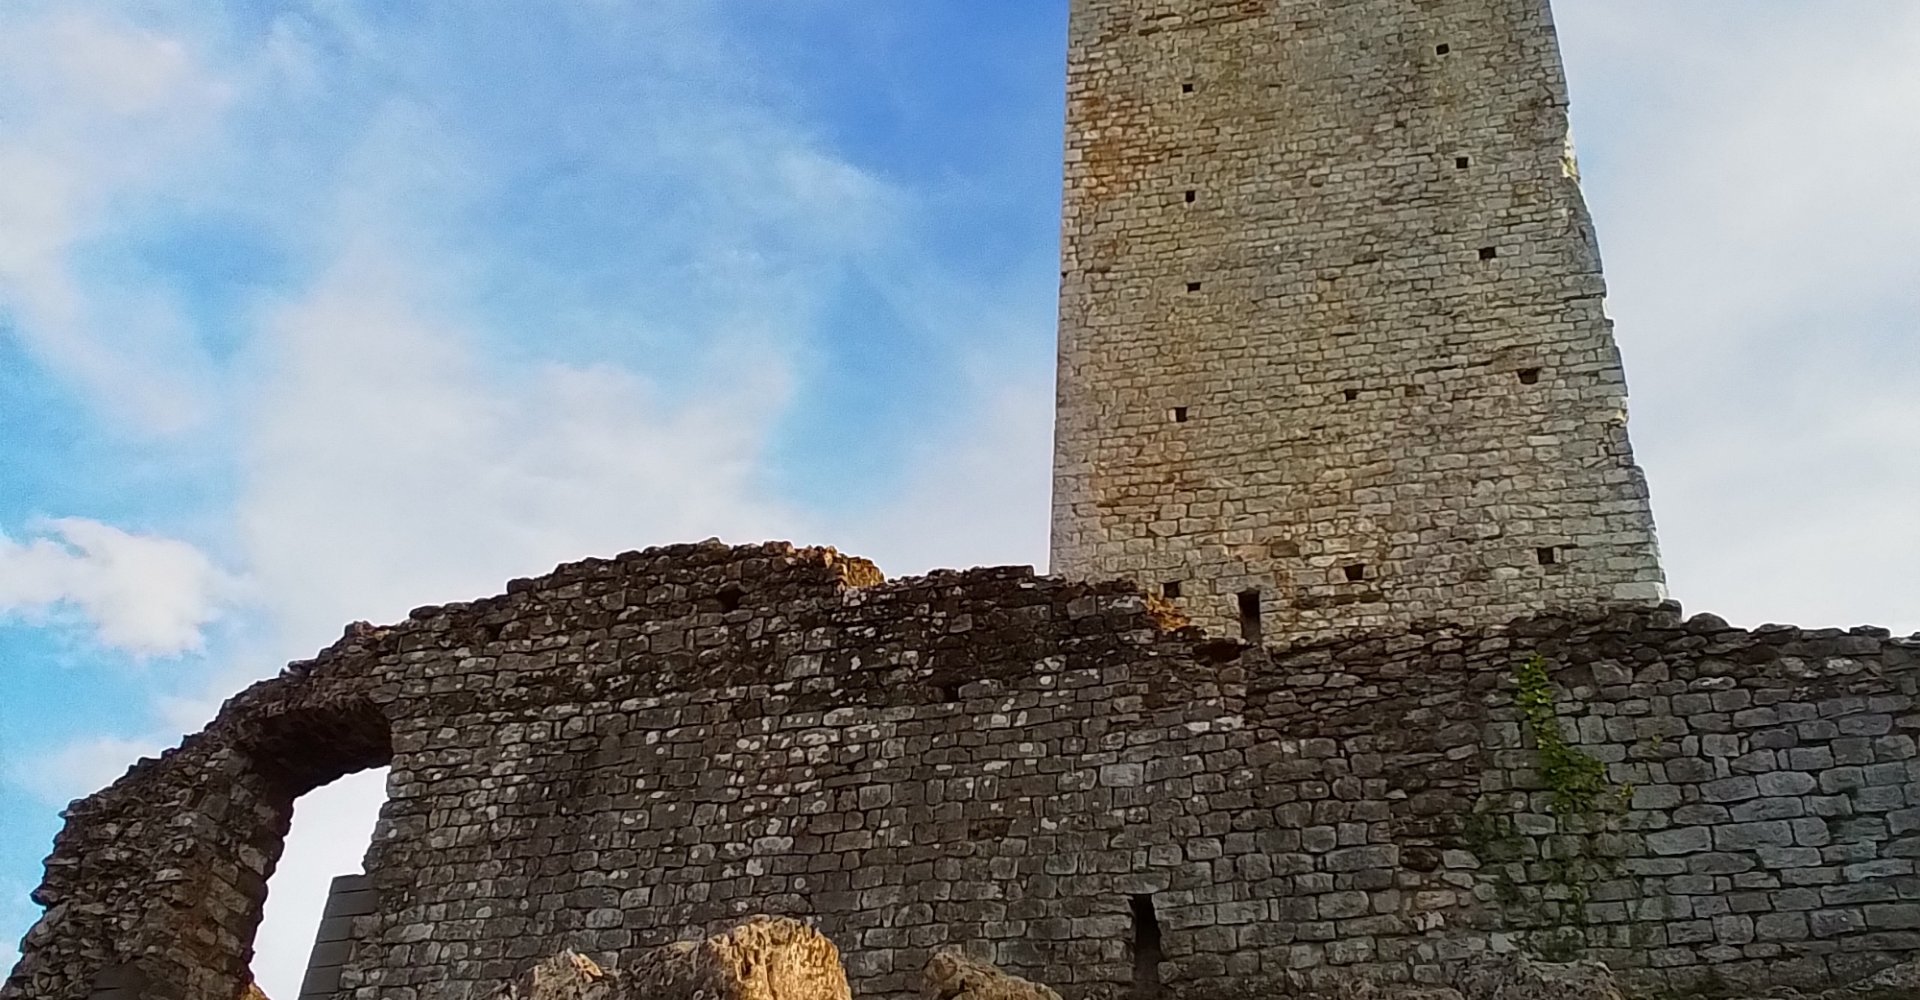 Barbarossa Tower